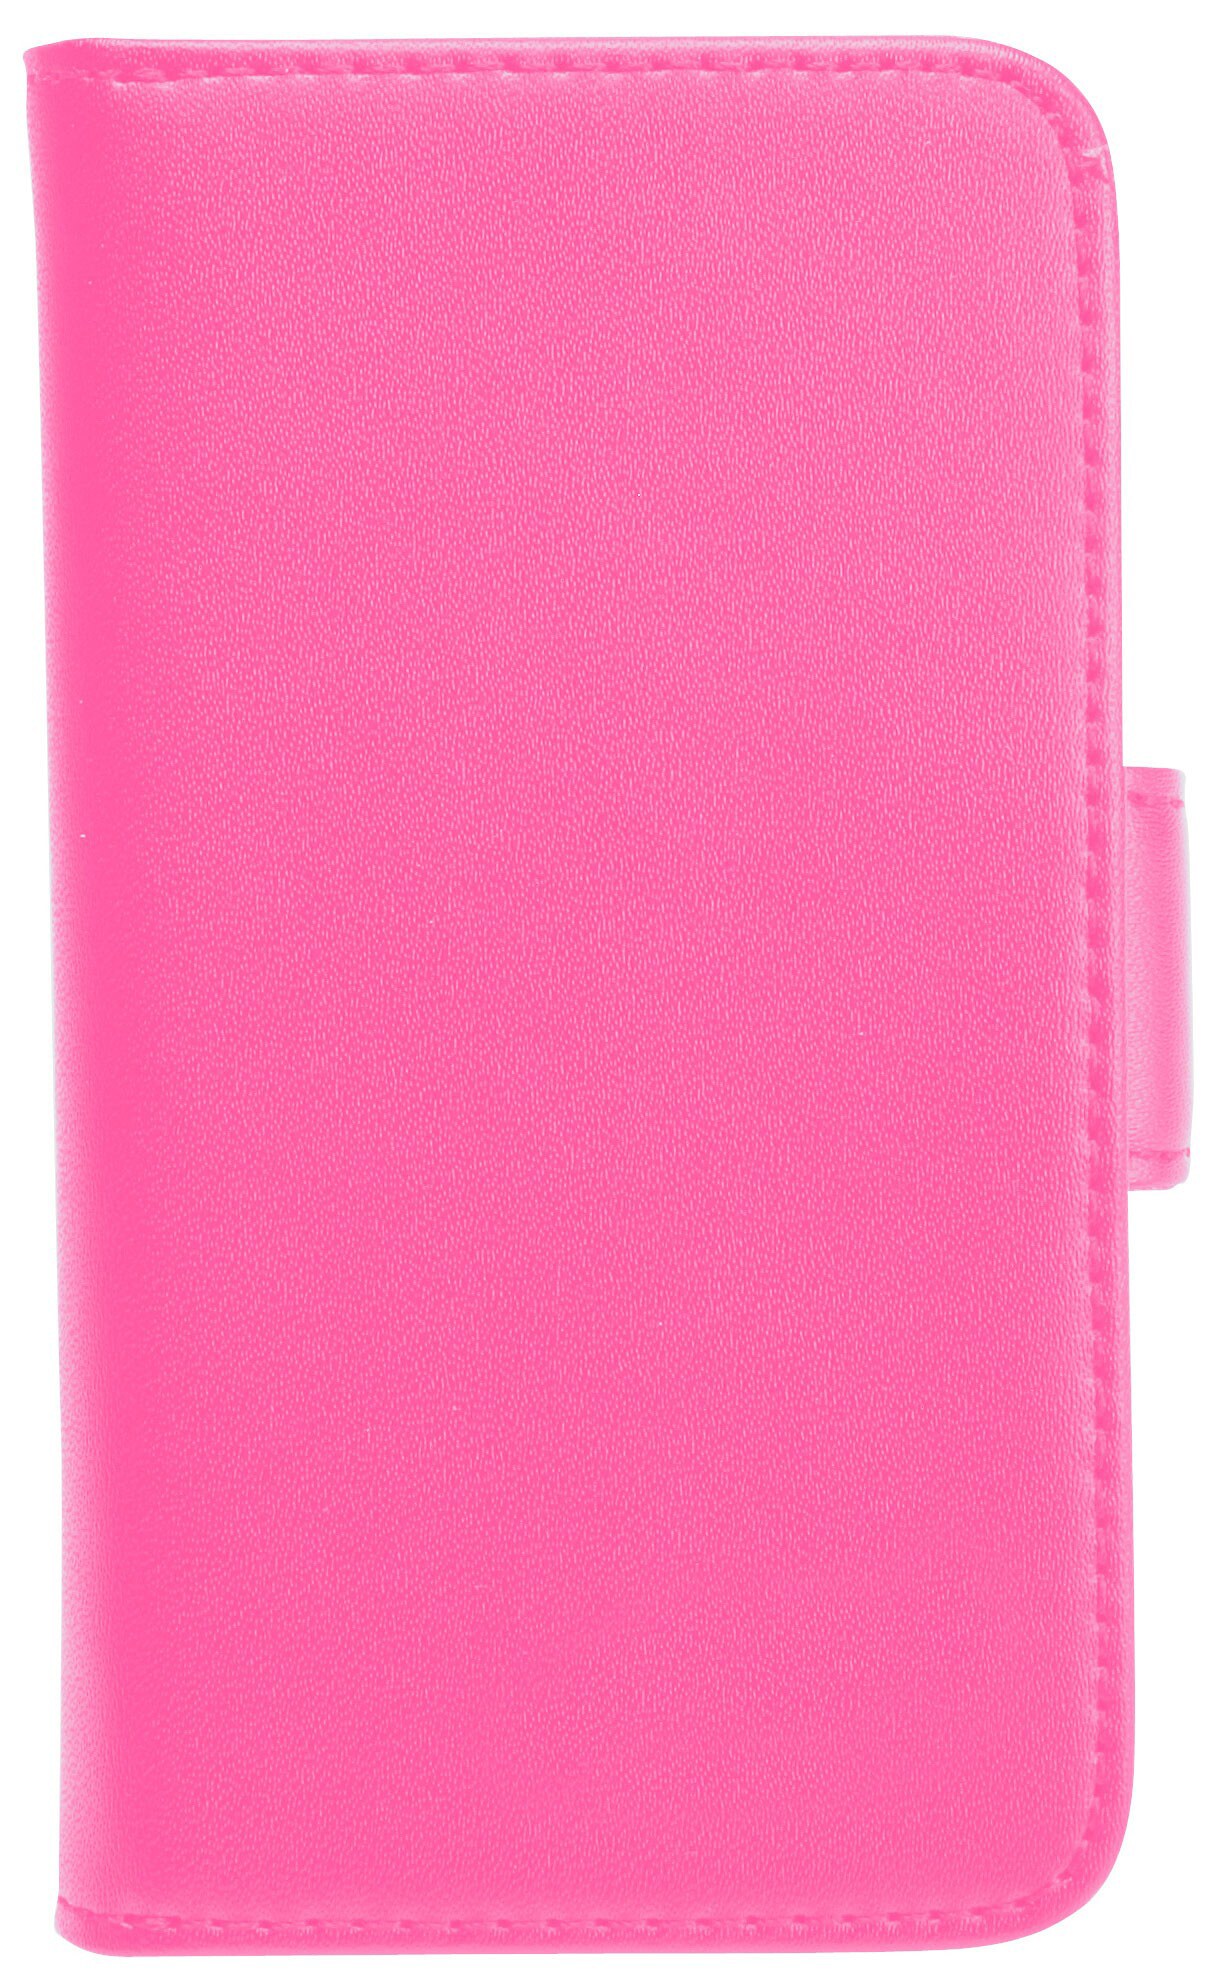 Gear Plånboksväska Xperia Z5 Compact (rosa) - Elgiganten